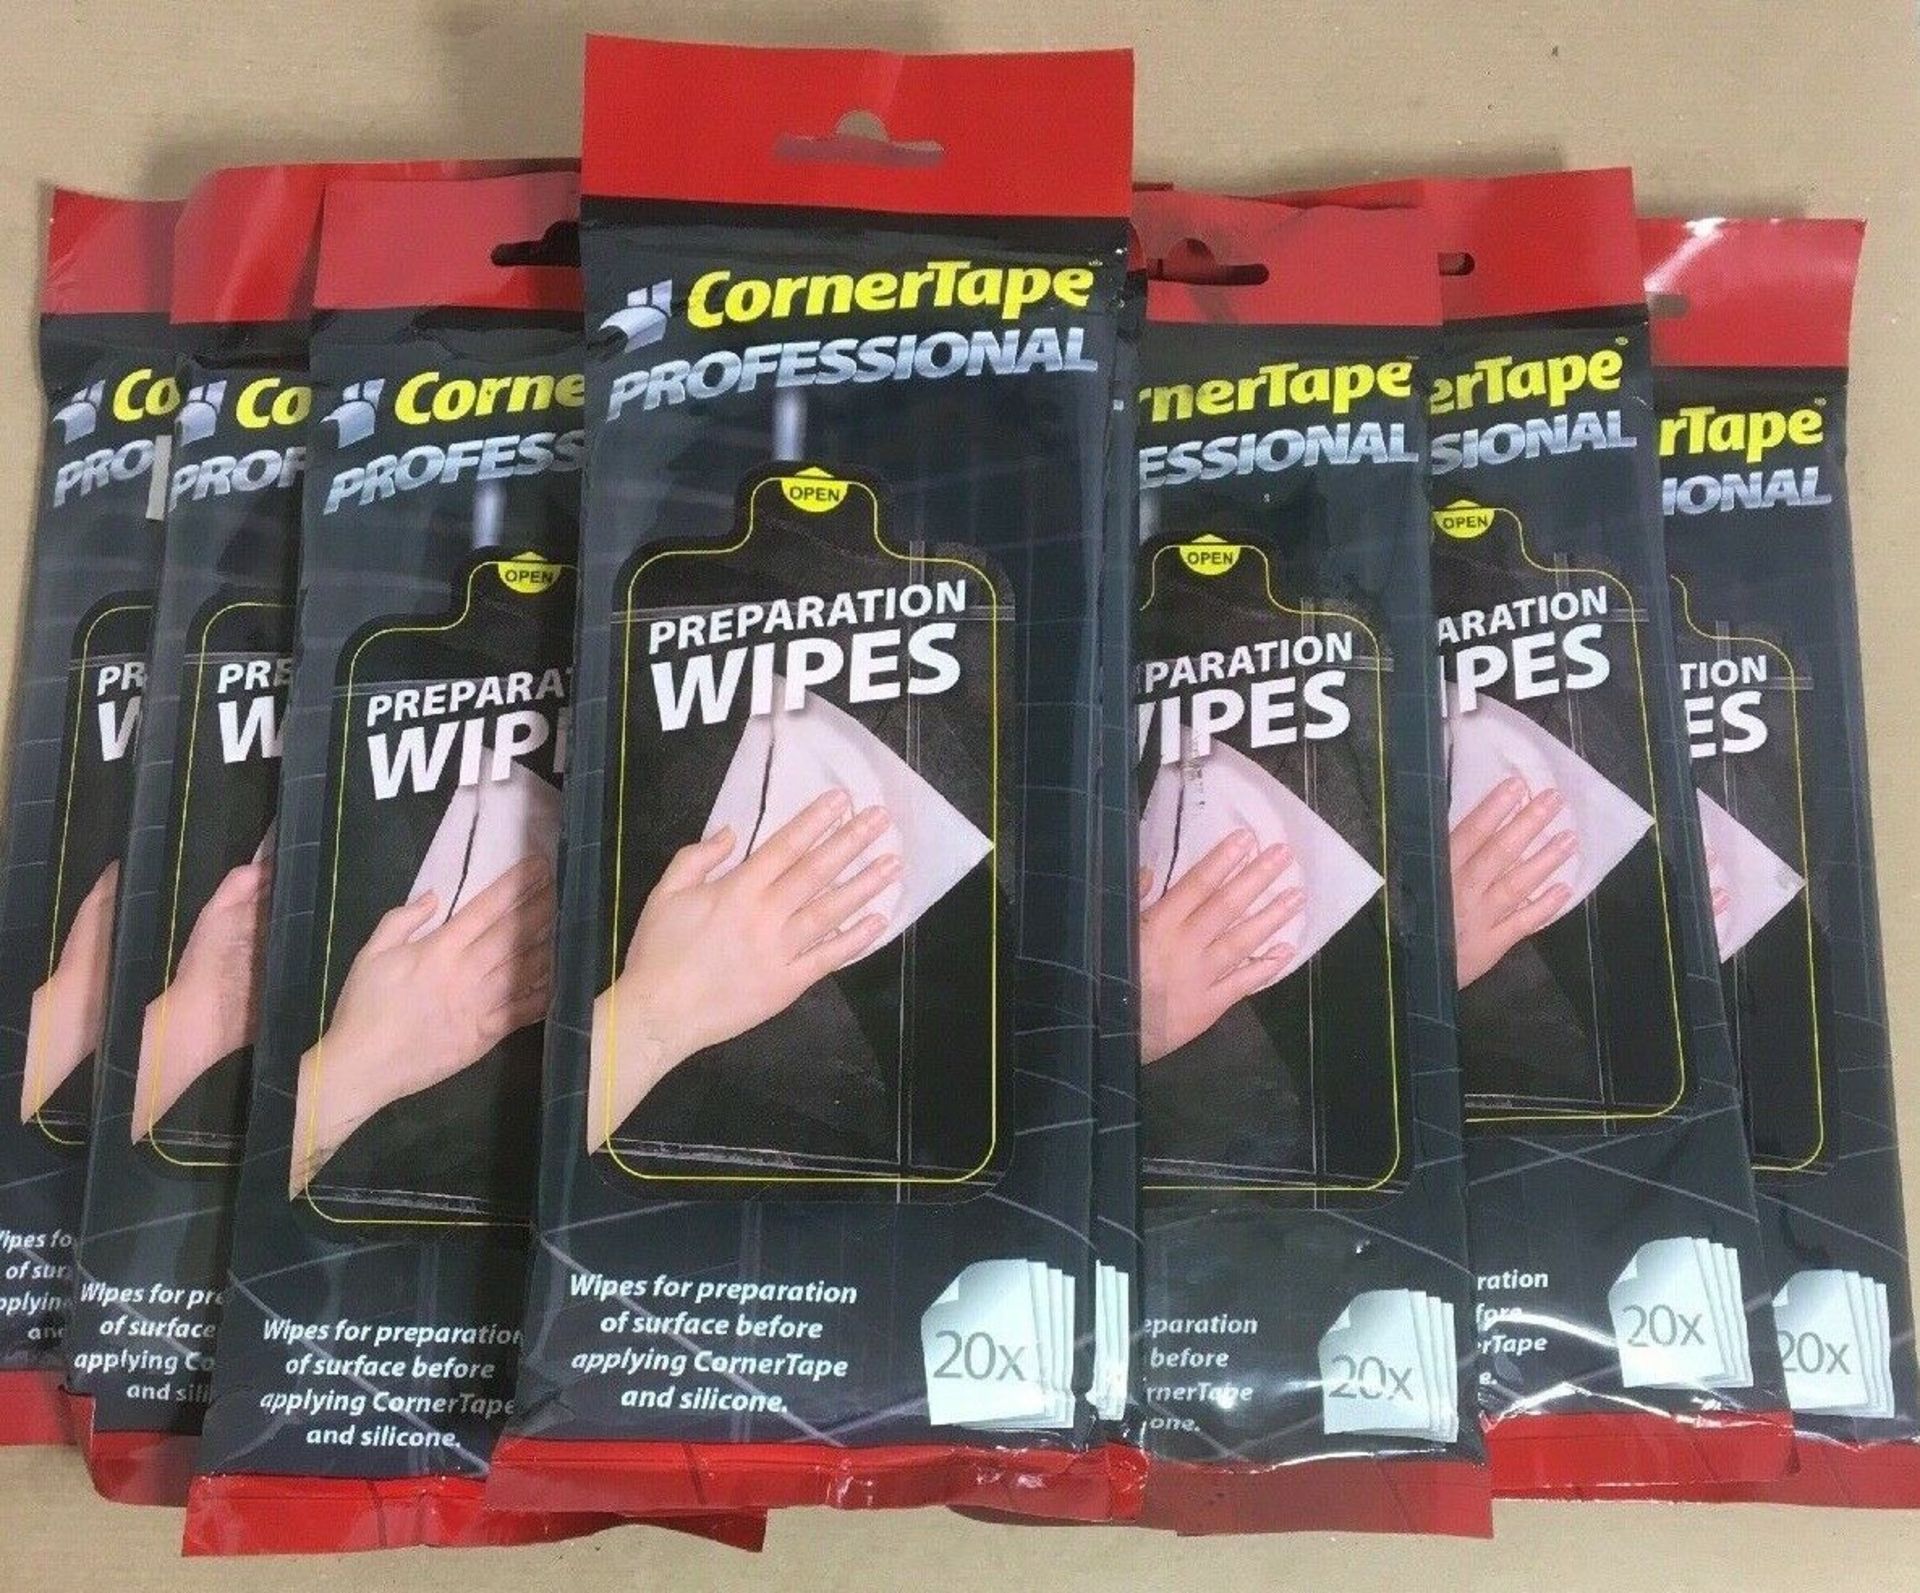 10 X Corner Tape Preperation Wipes 20 per pack x 10 packs total wipes = 200